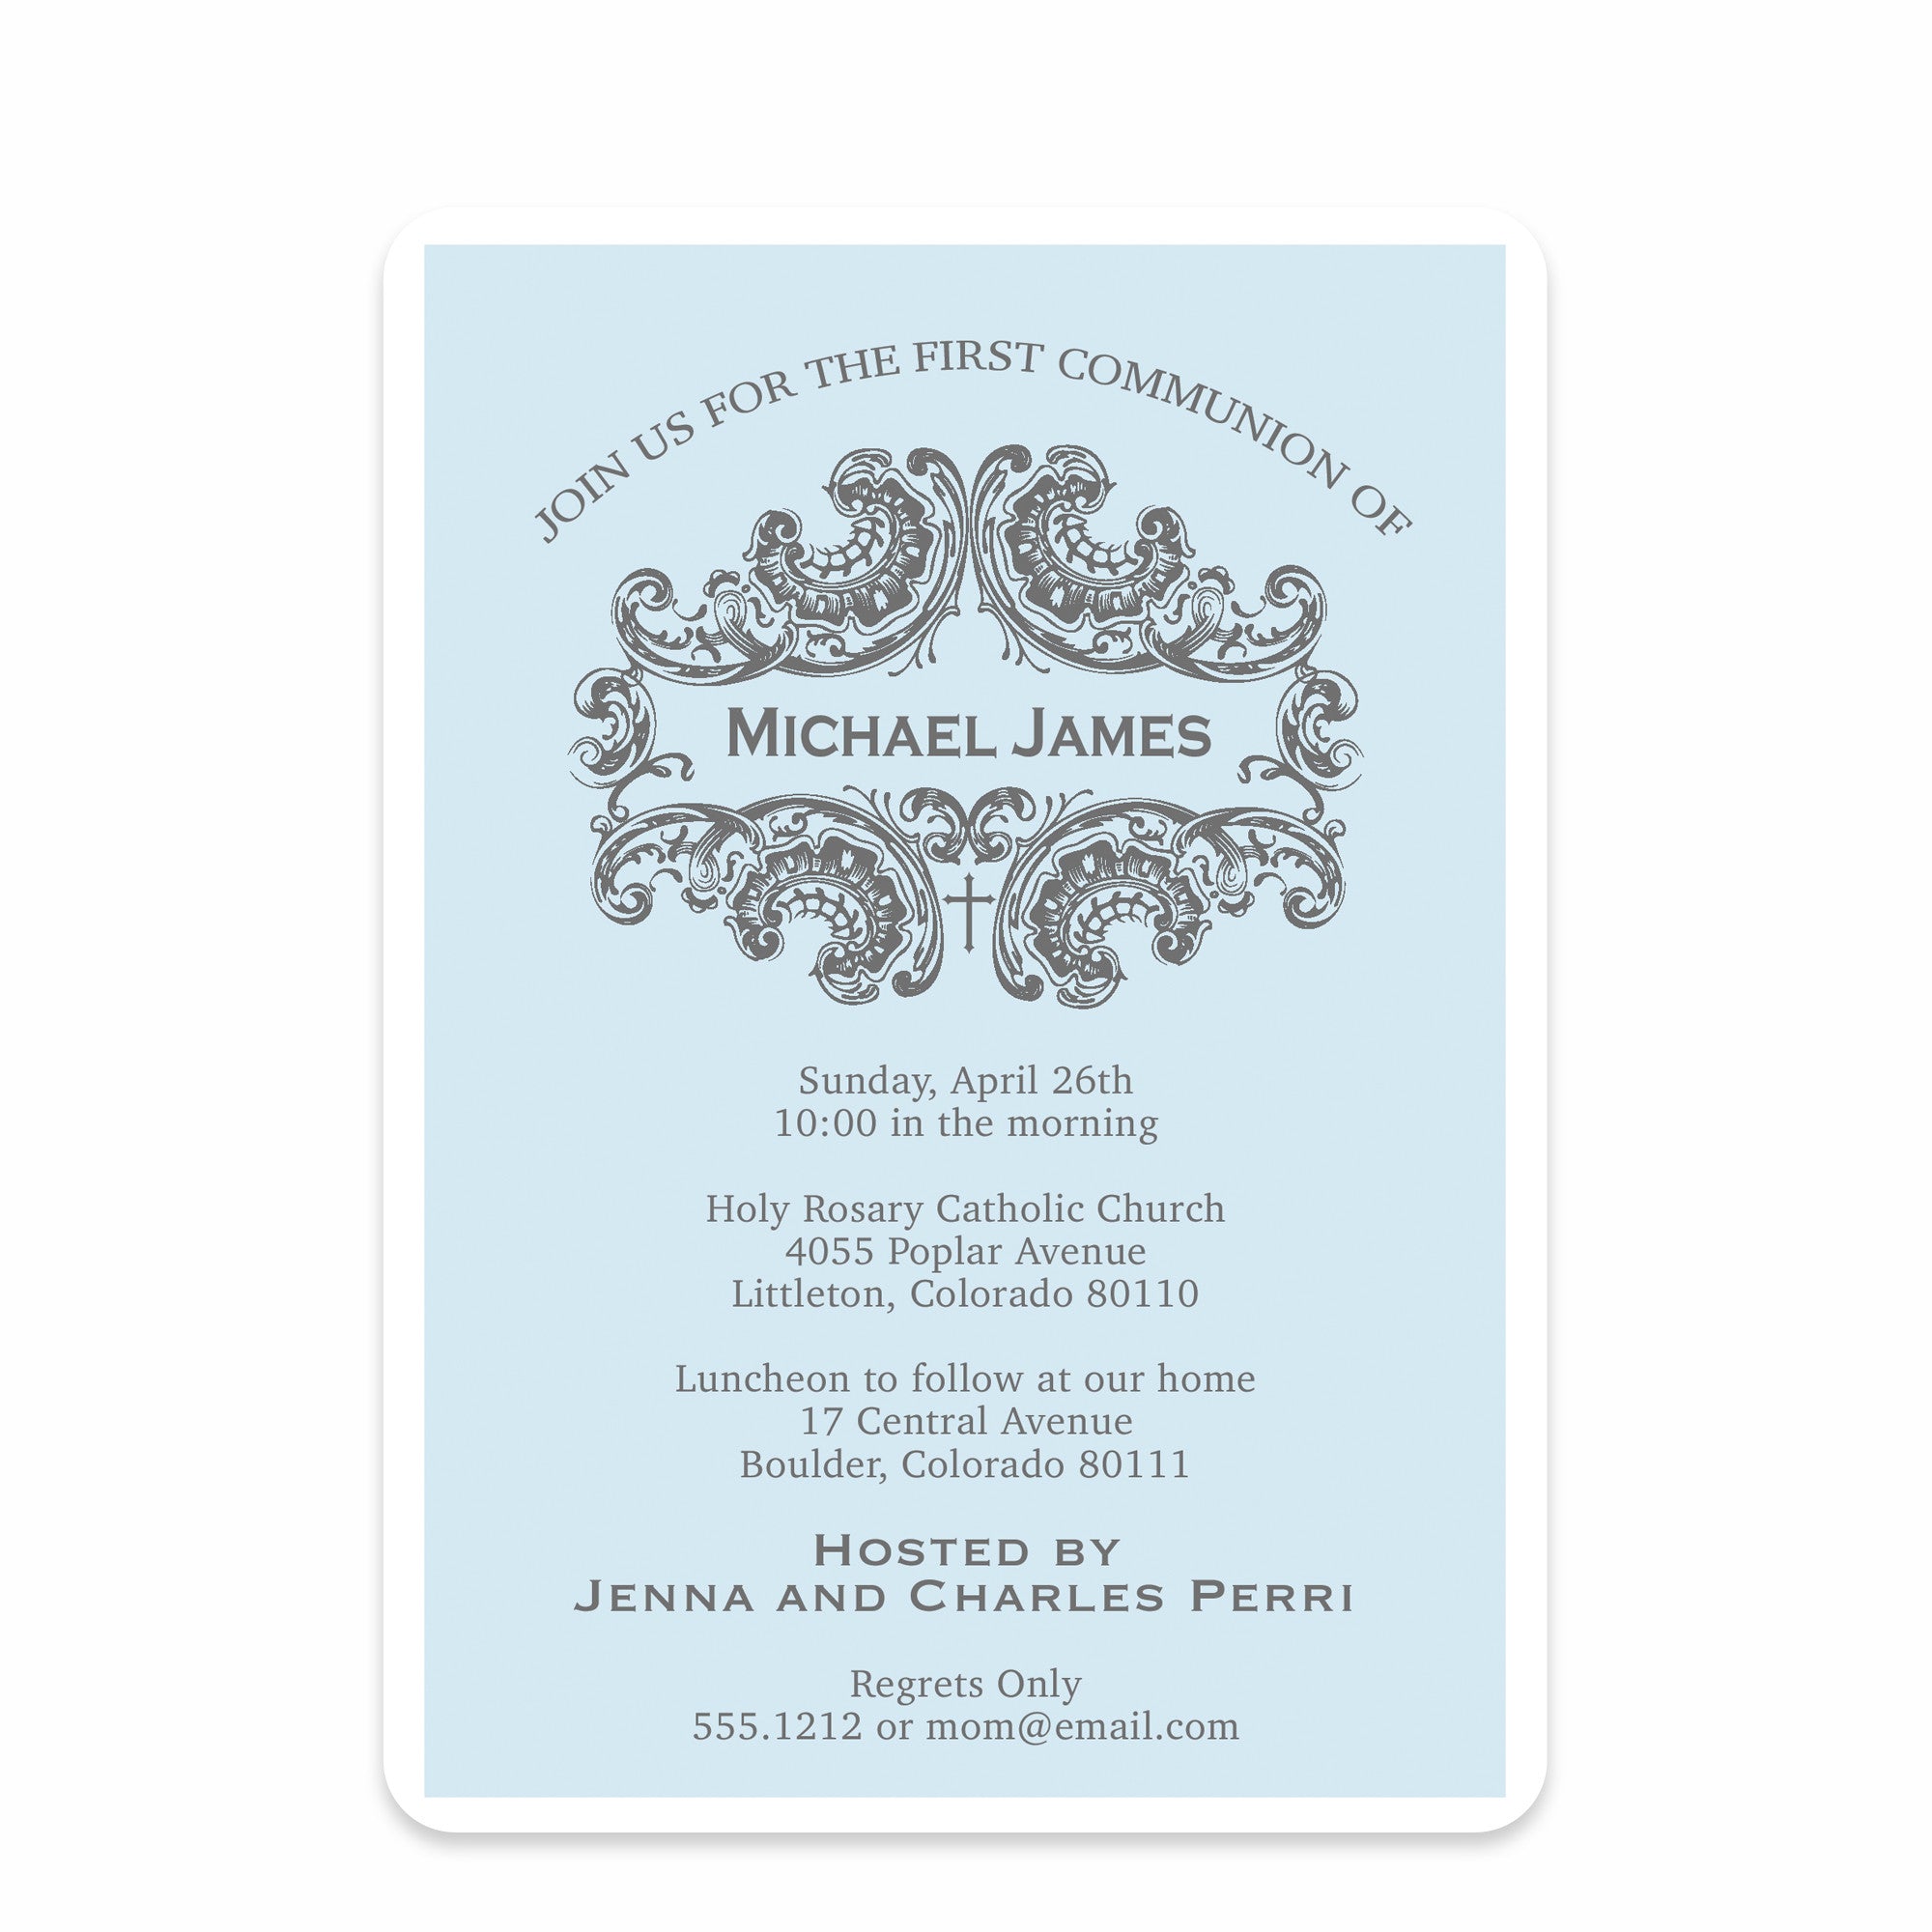 Baptism Invitation, Elegant Design in Blue, Printed on Premium Heavy Cardstock, Pipsy.com, front